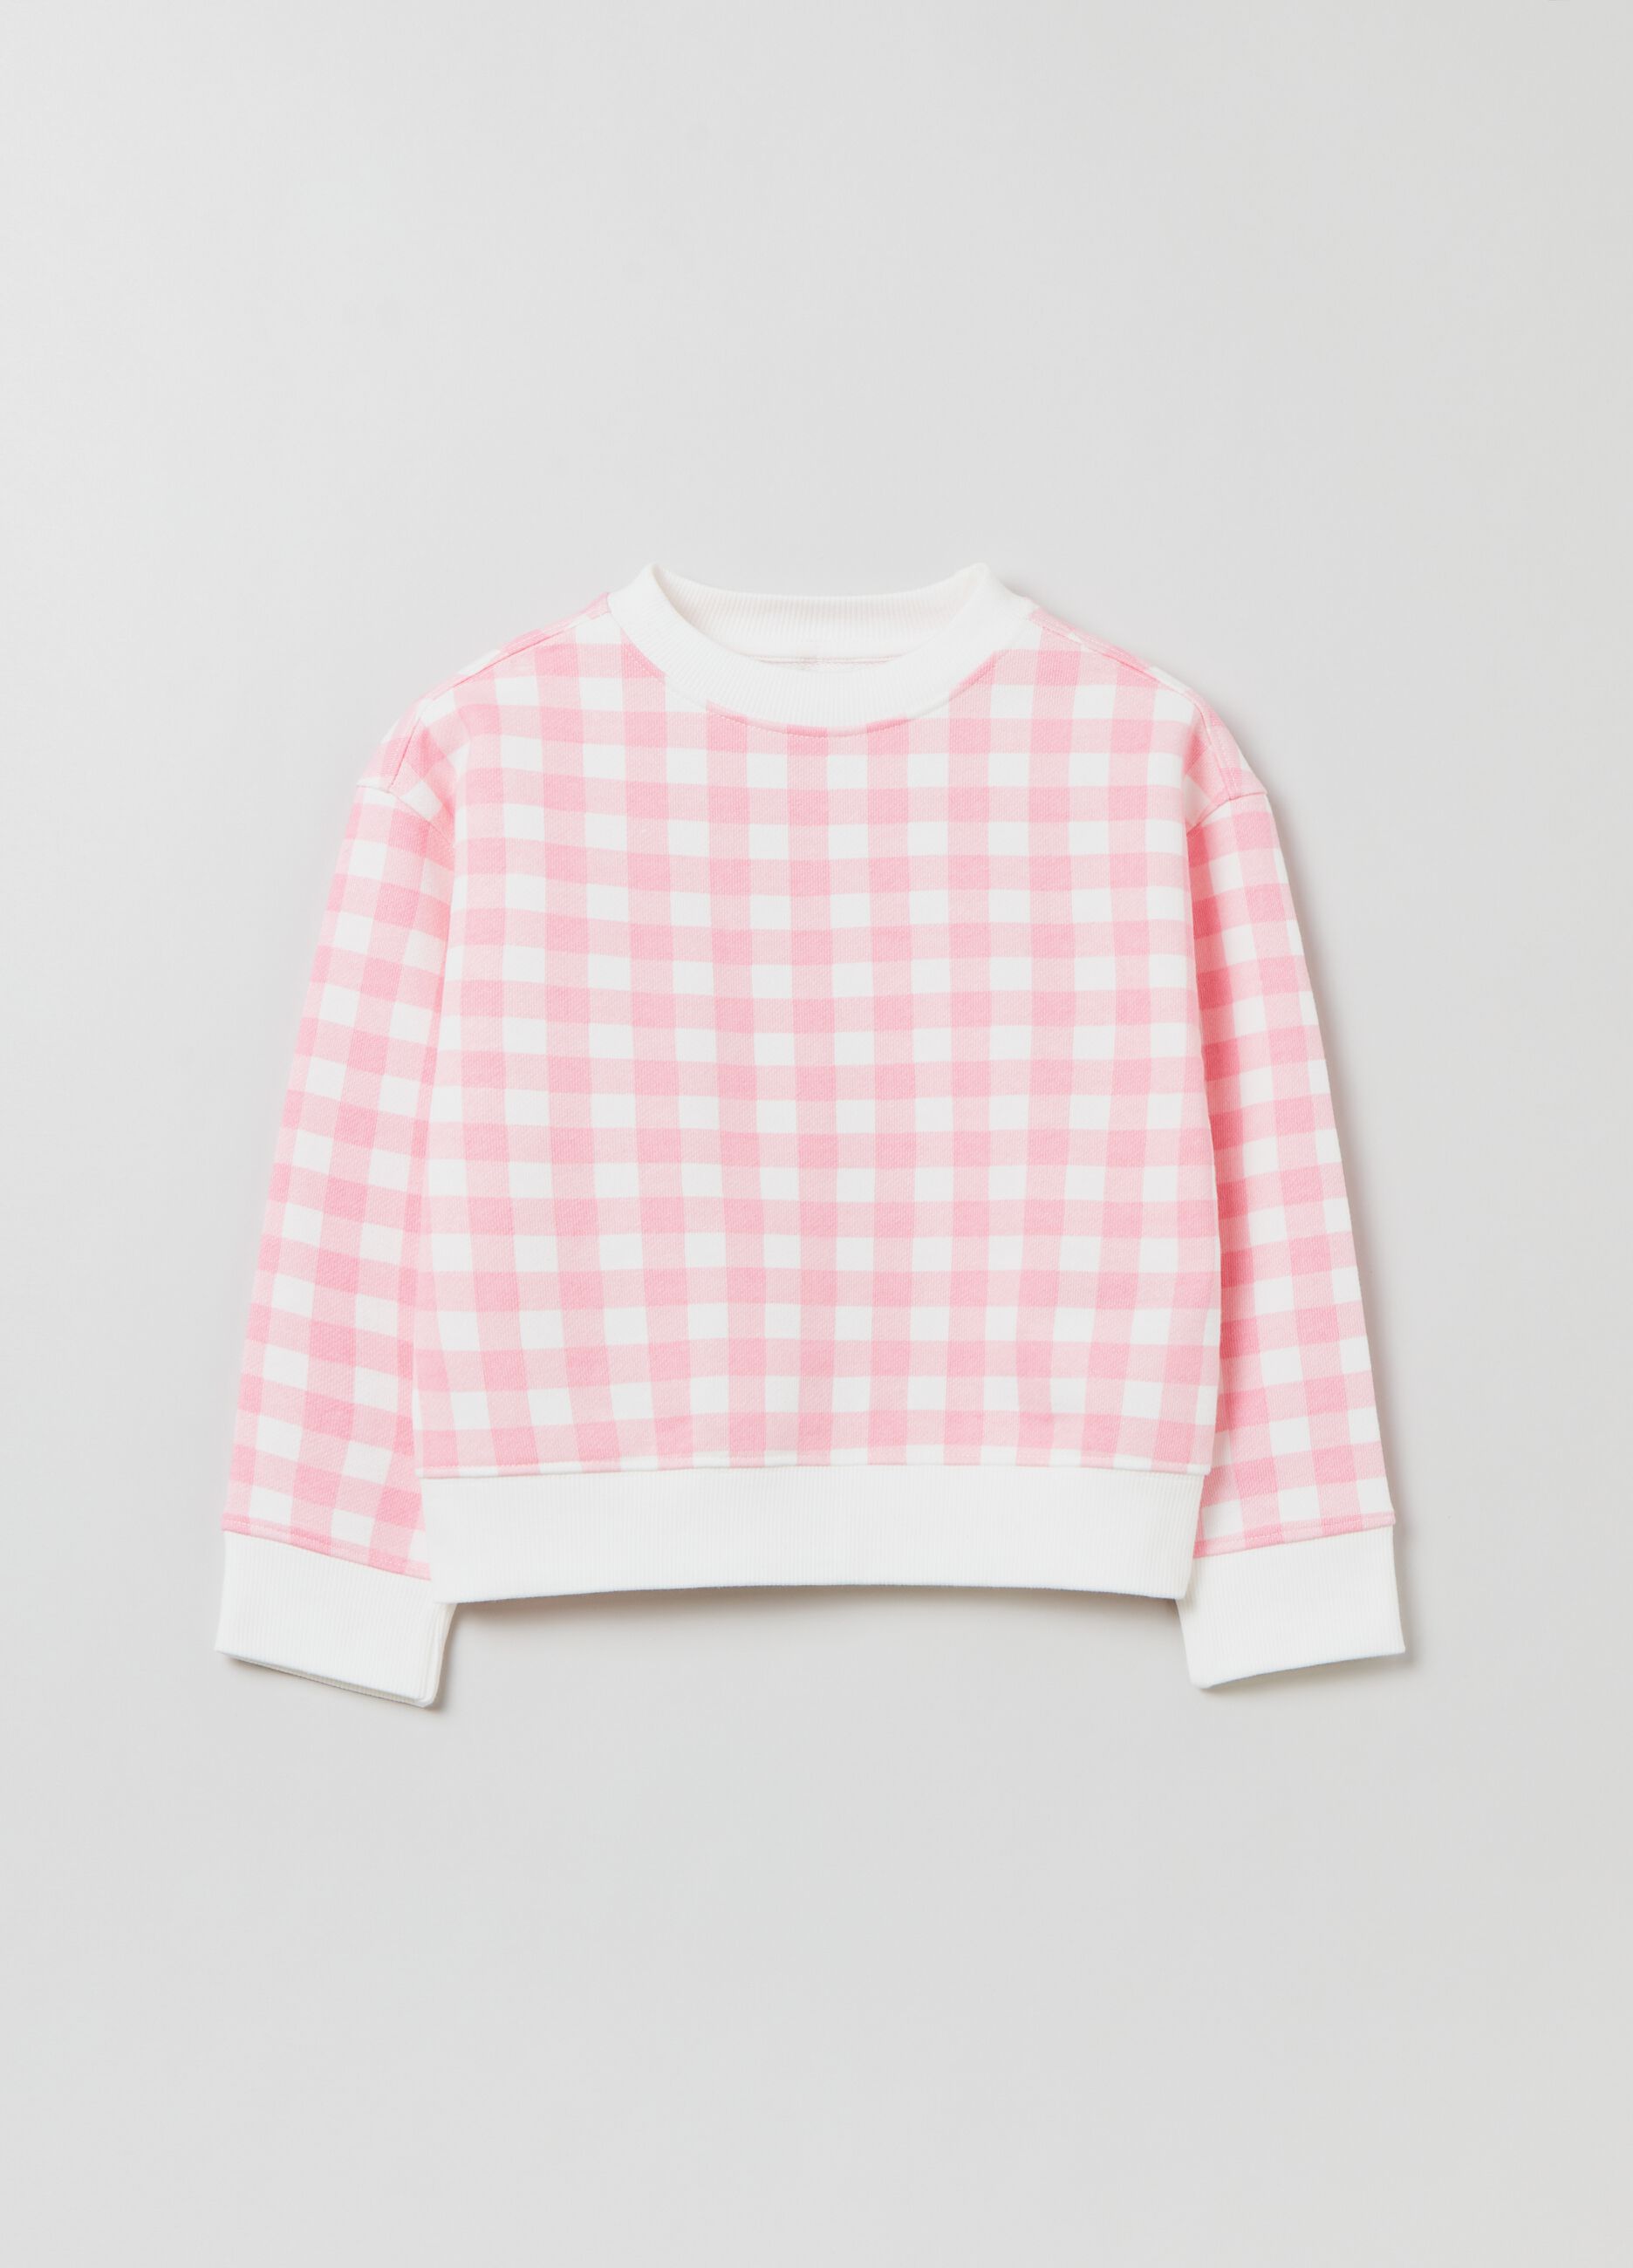 Cotton sweatshirt with gingham pattern